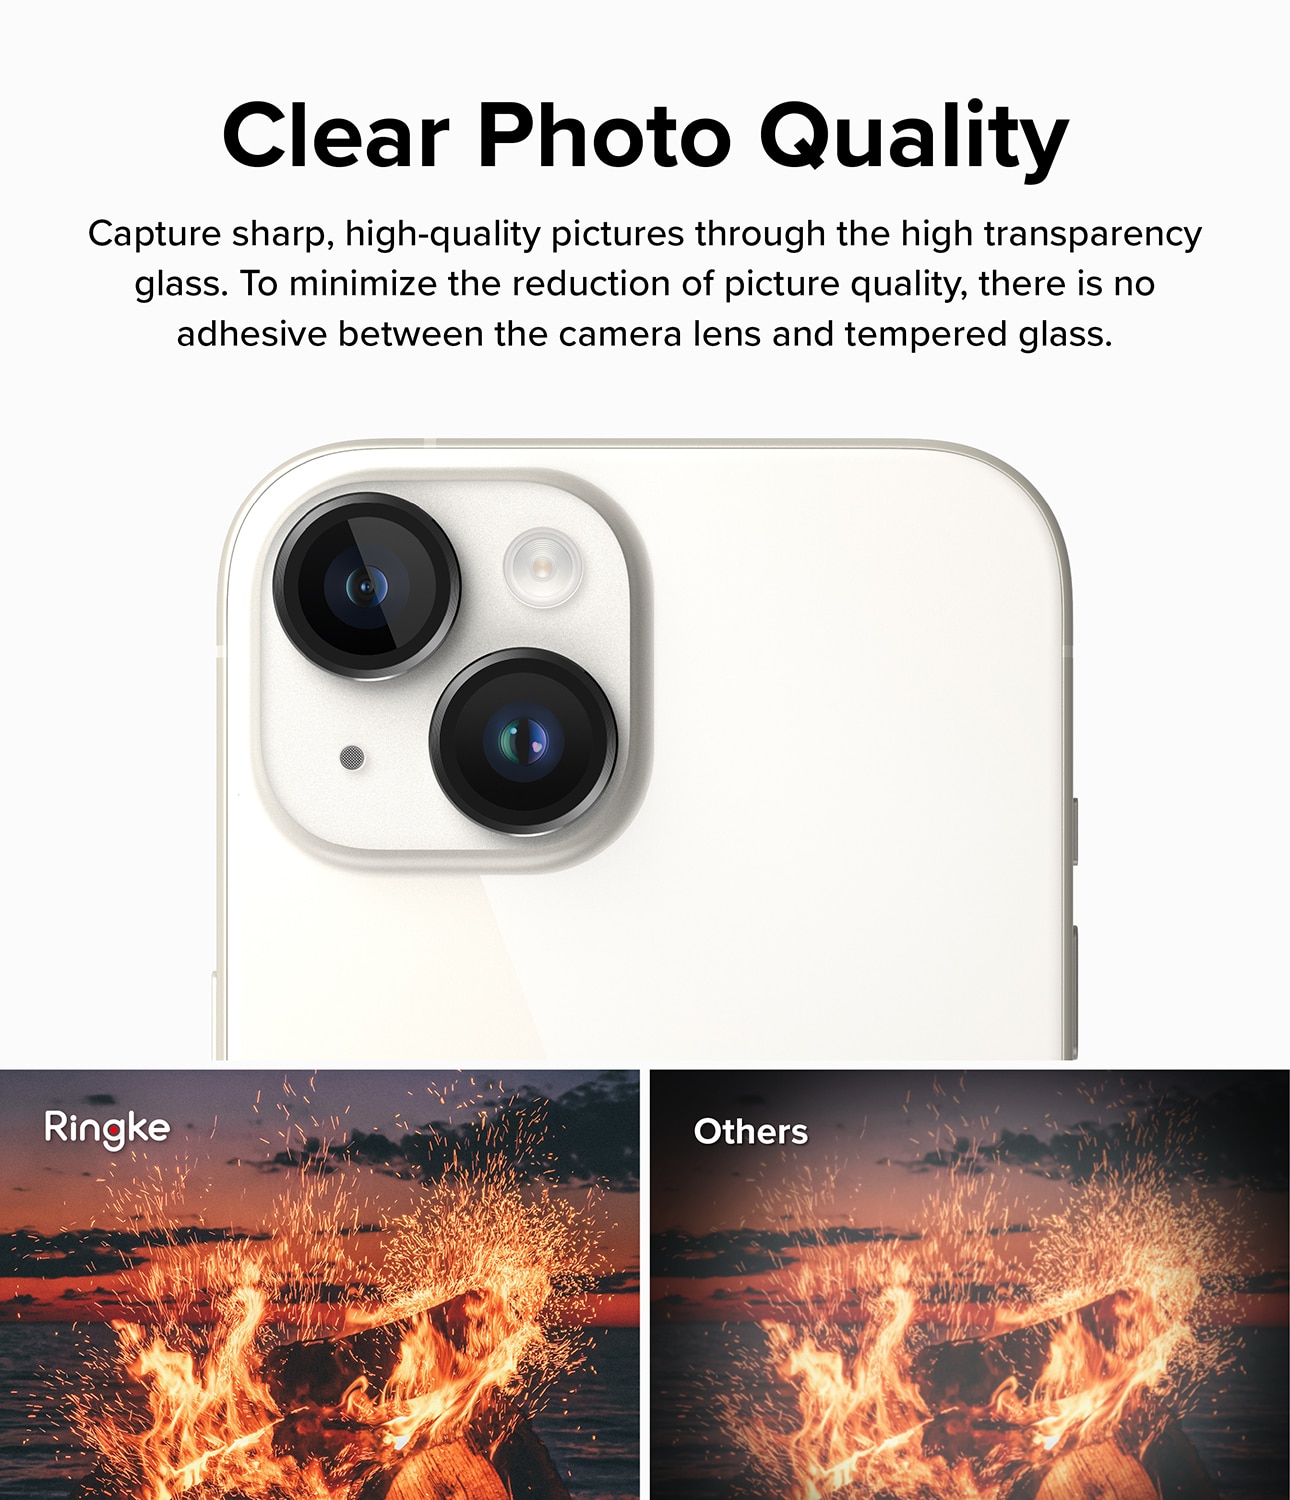 iPhone 15 Camera Lens Frame Glass Black